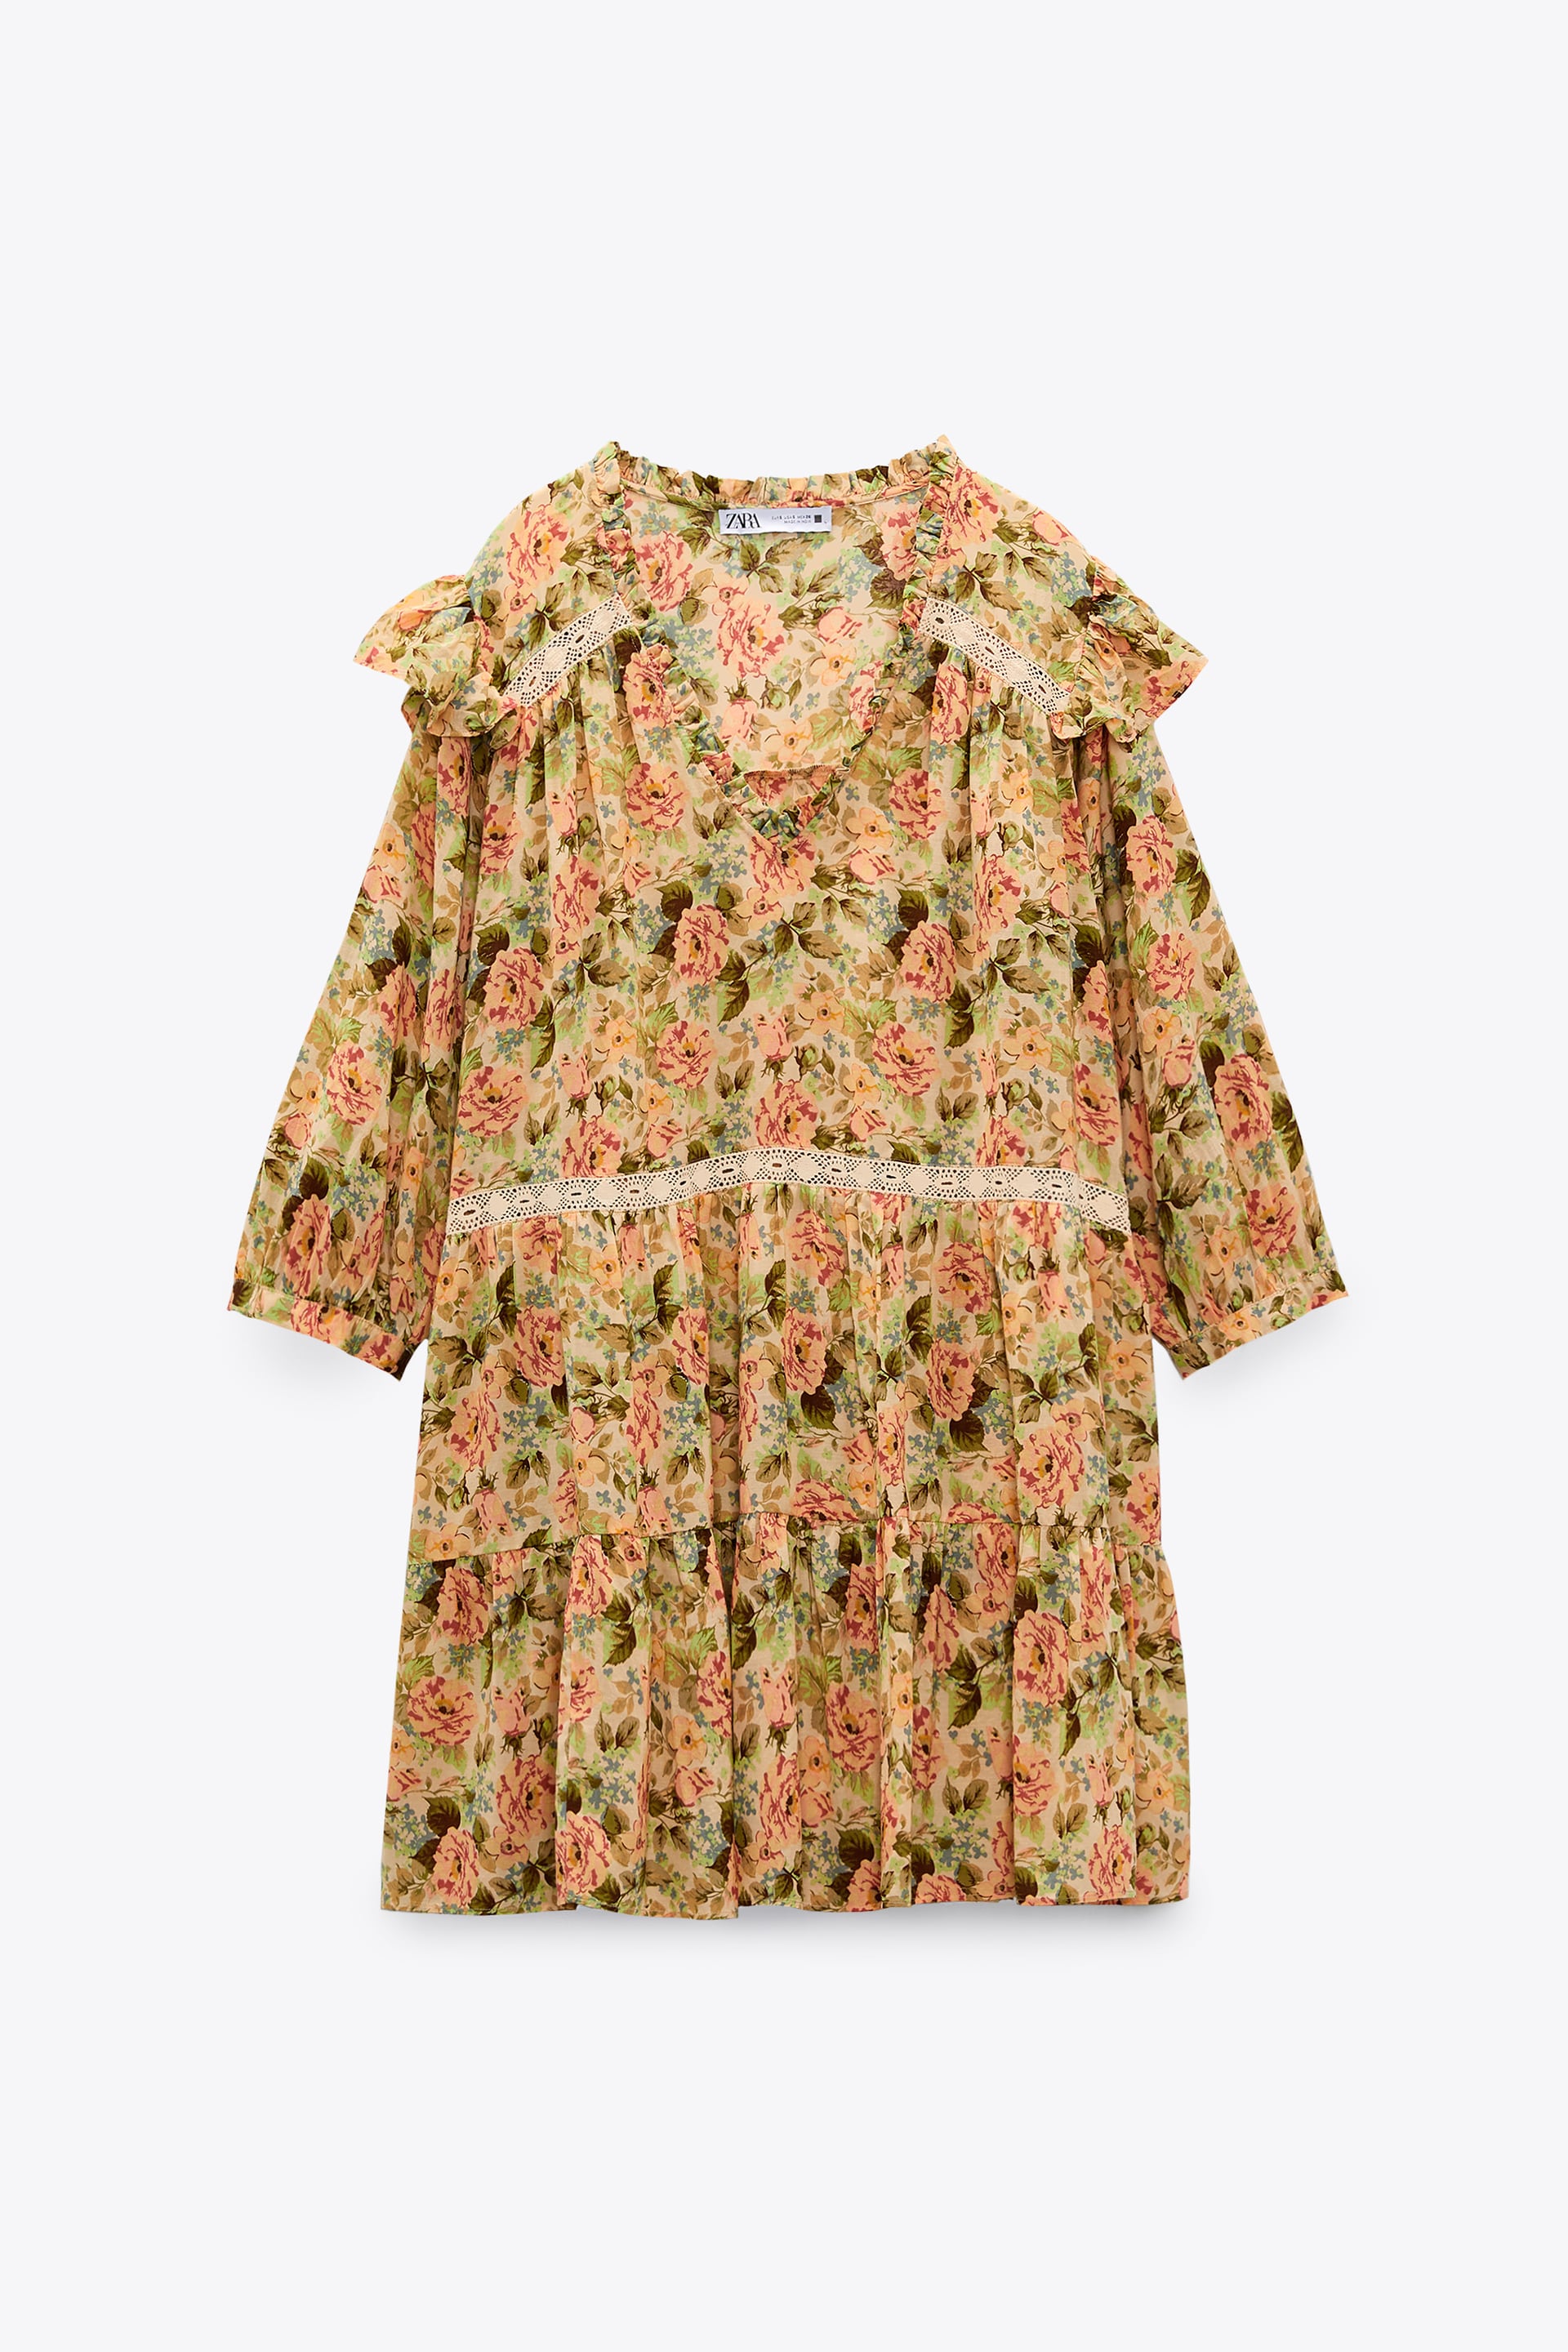 Zara floral maxi shirt dress | RegalFille | Duchess of Cambridge